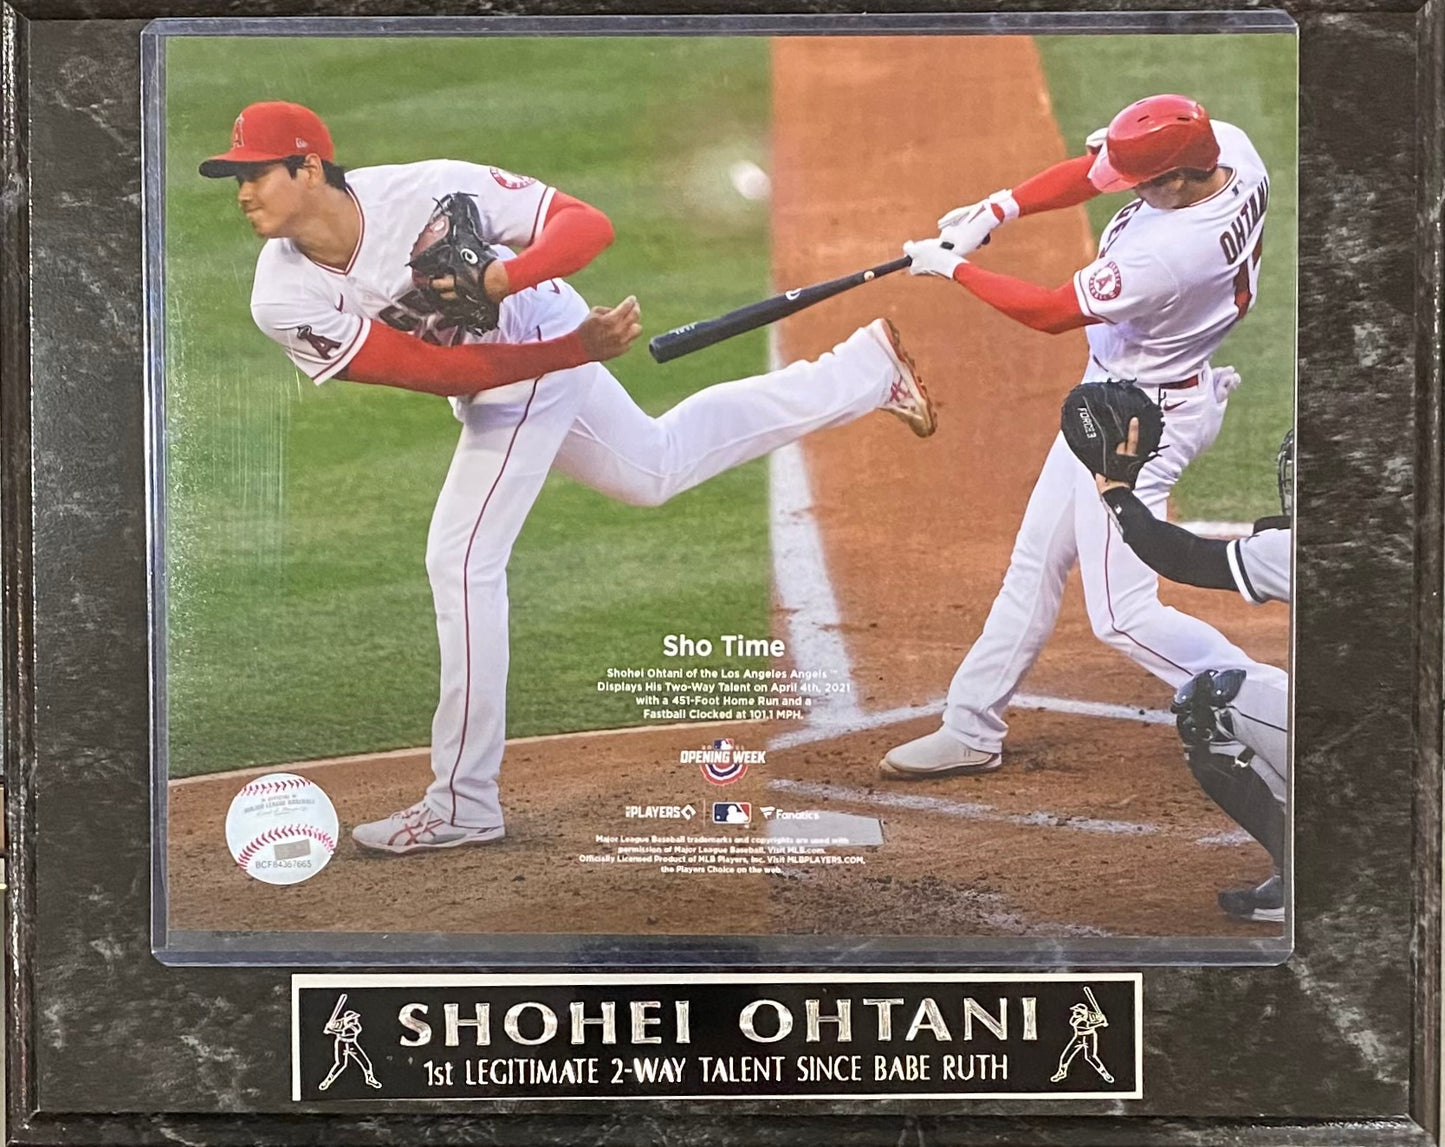 Shohei Ohtani 1st Legitimate 2-Way Talent Since Babe Ruth  Plaque